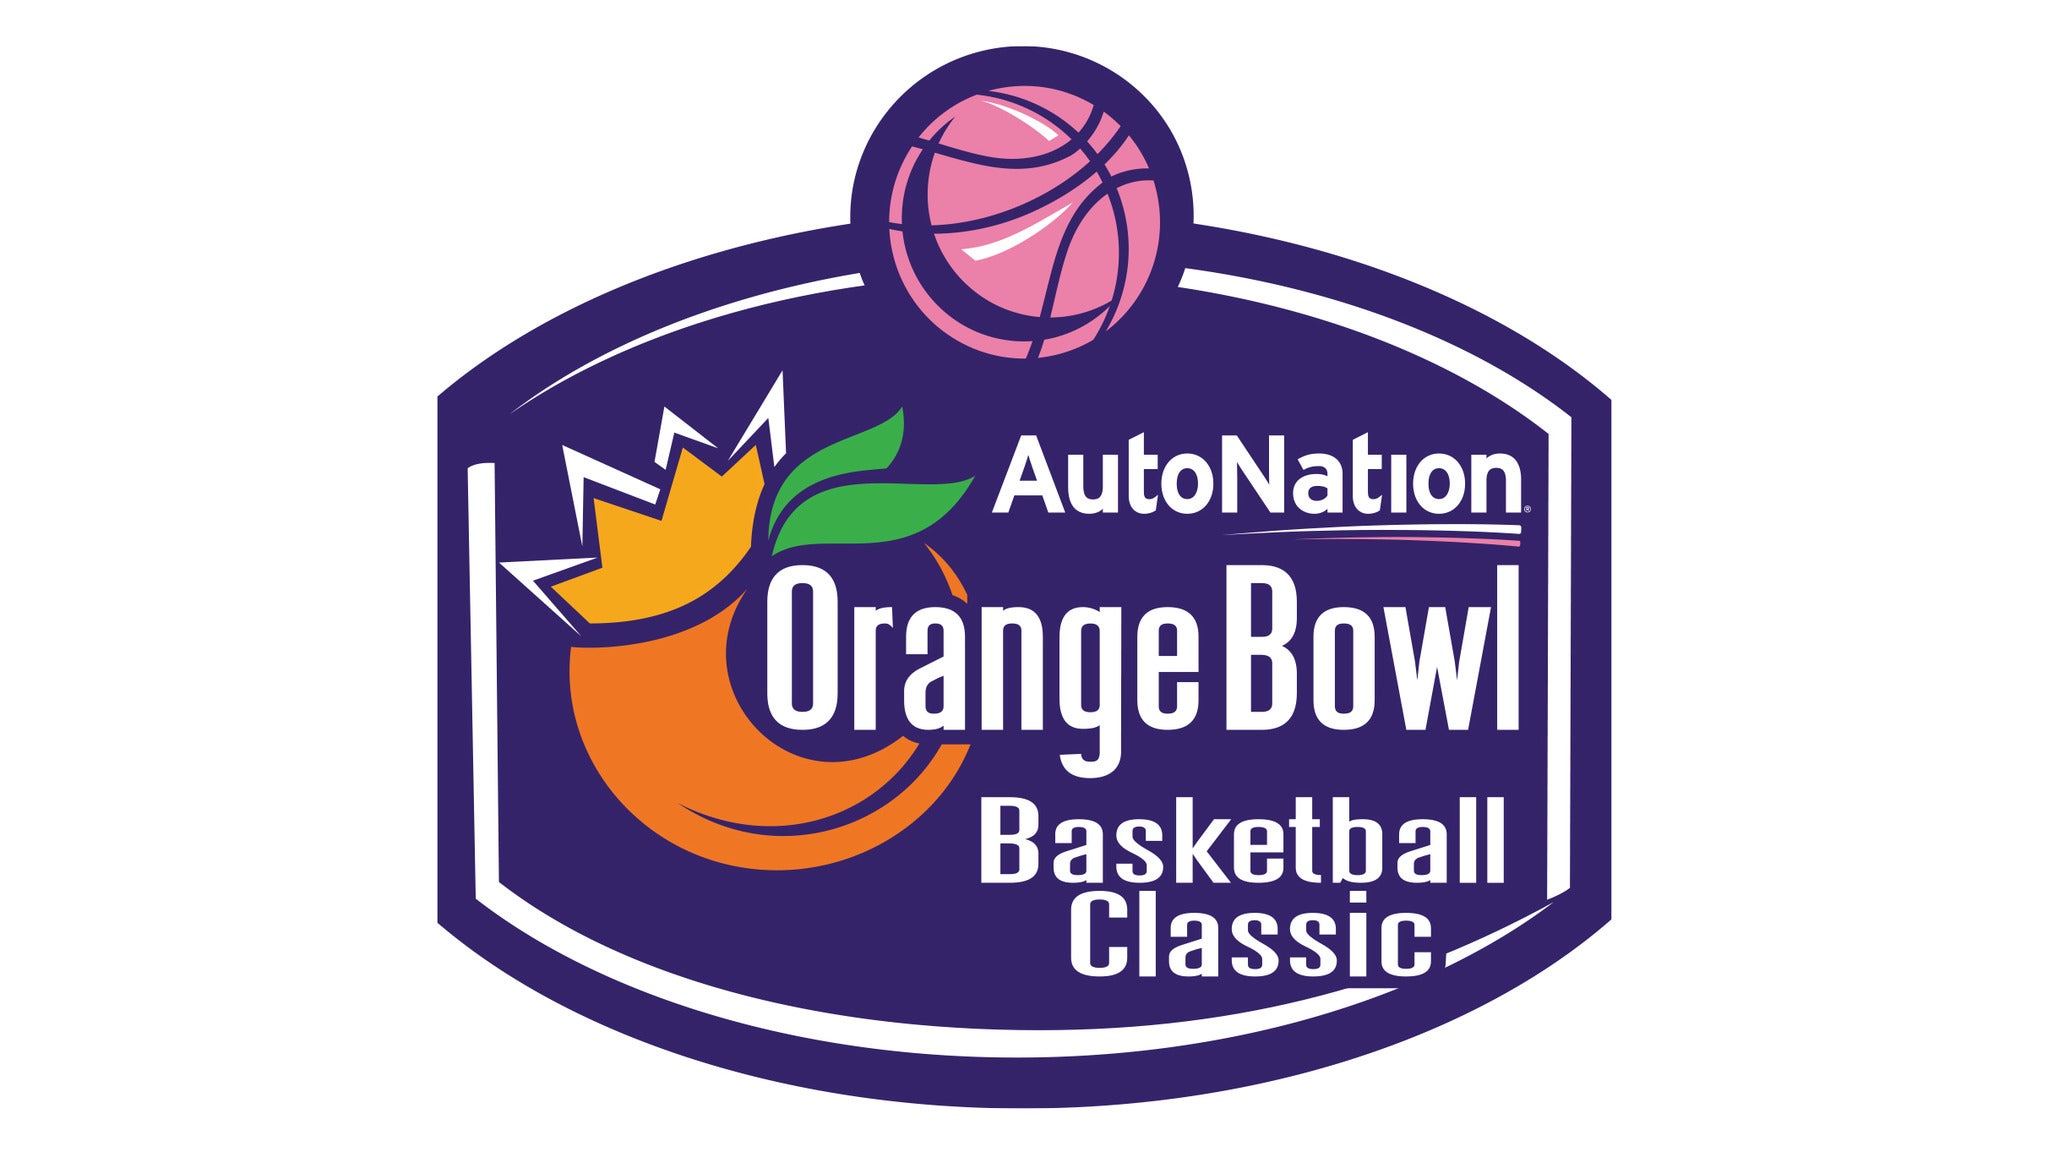 AutoNation Orange Bowl Basketball Classic at FLA Live Arena